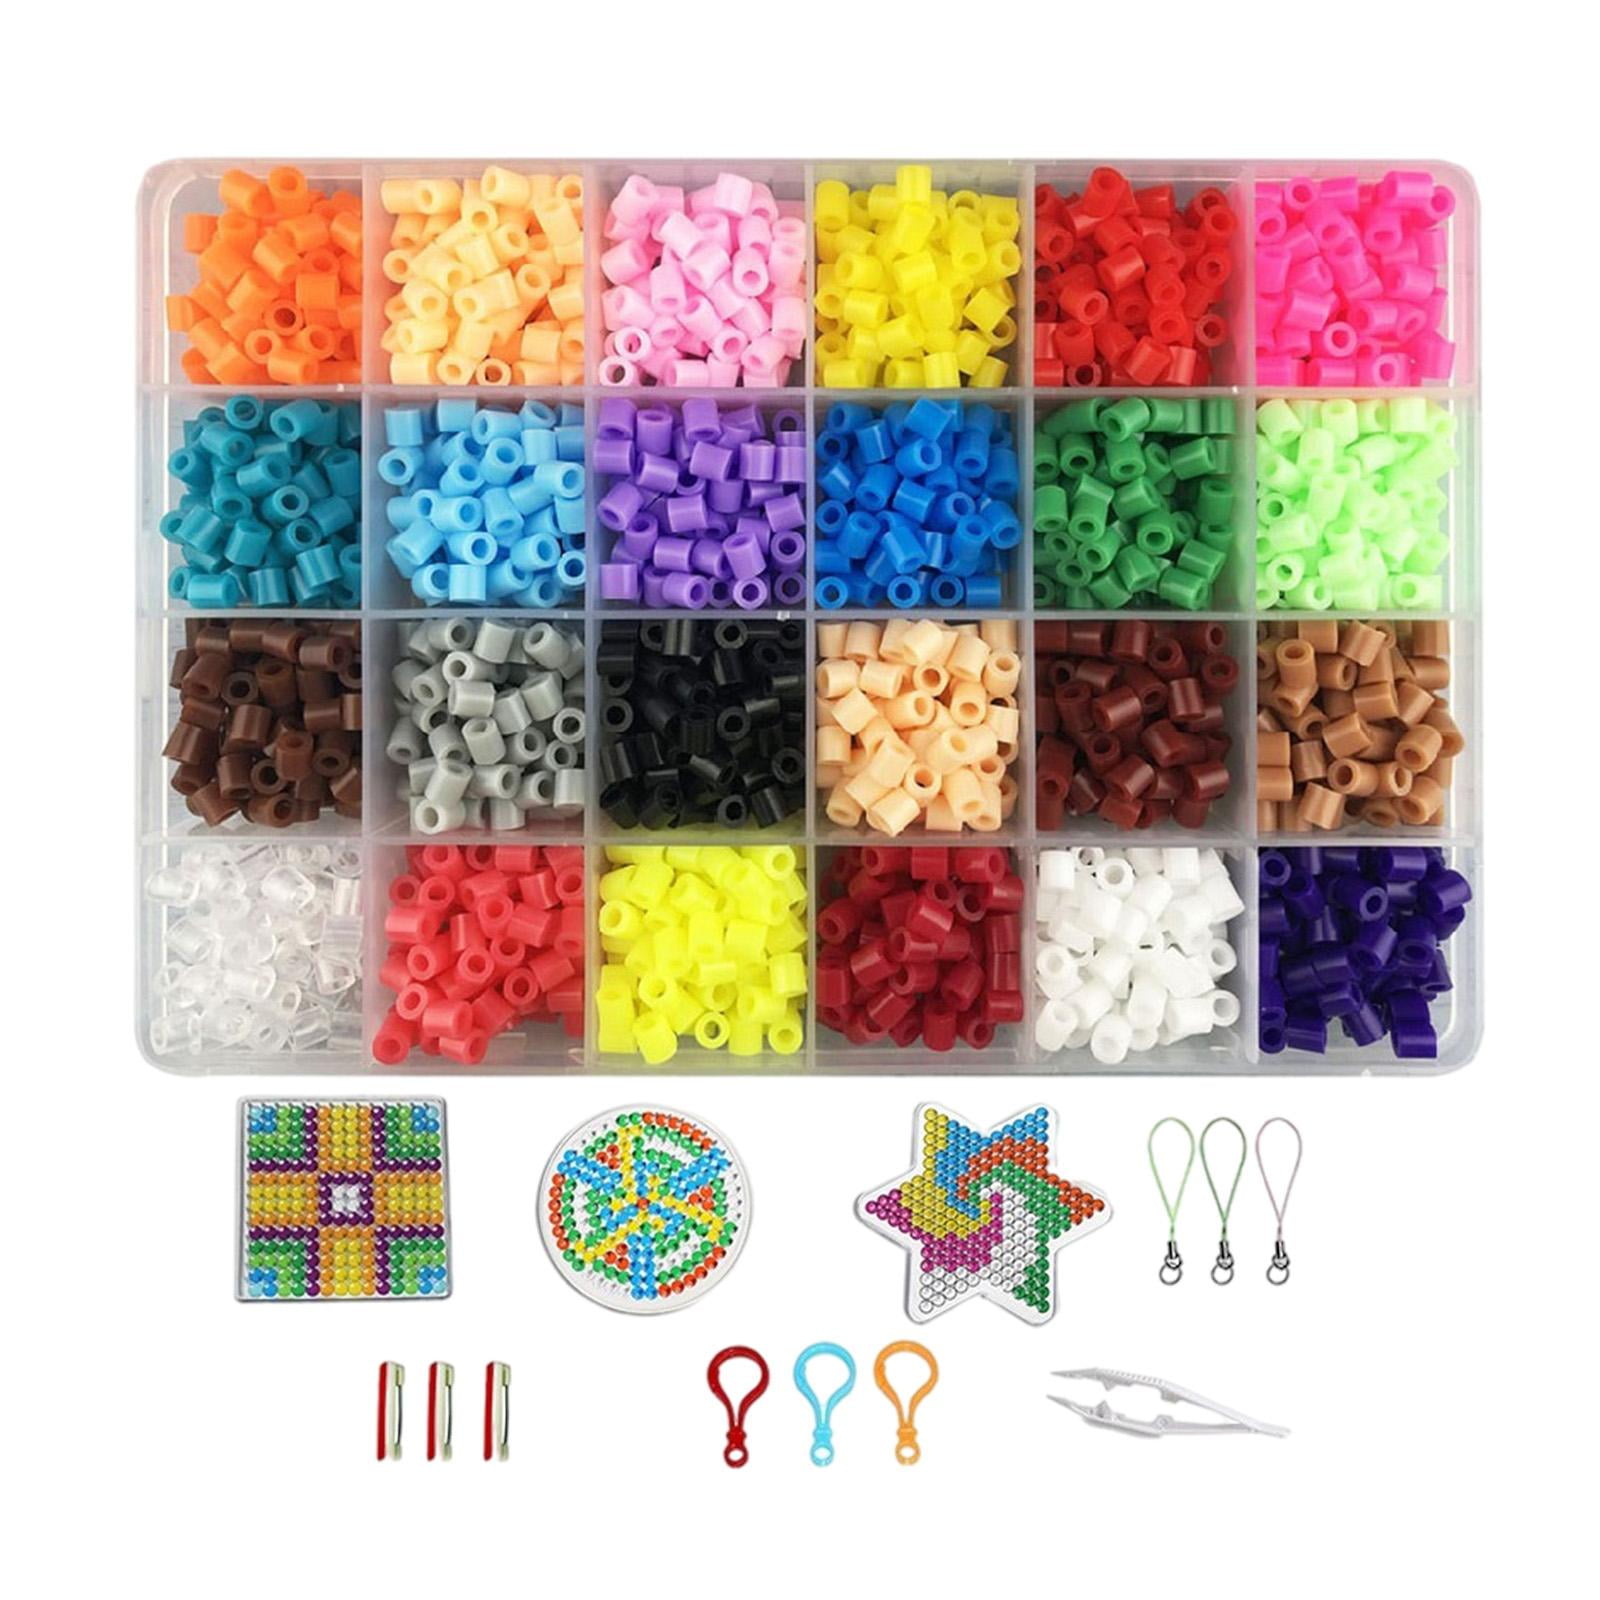 Hama 2400x Hama Beads Fuse Beads Craft Kit Perler Beads Colorful 3D Children Gift 